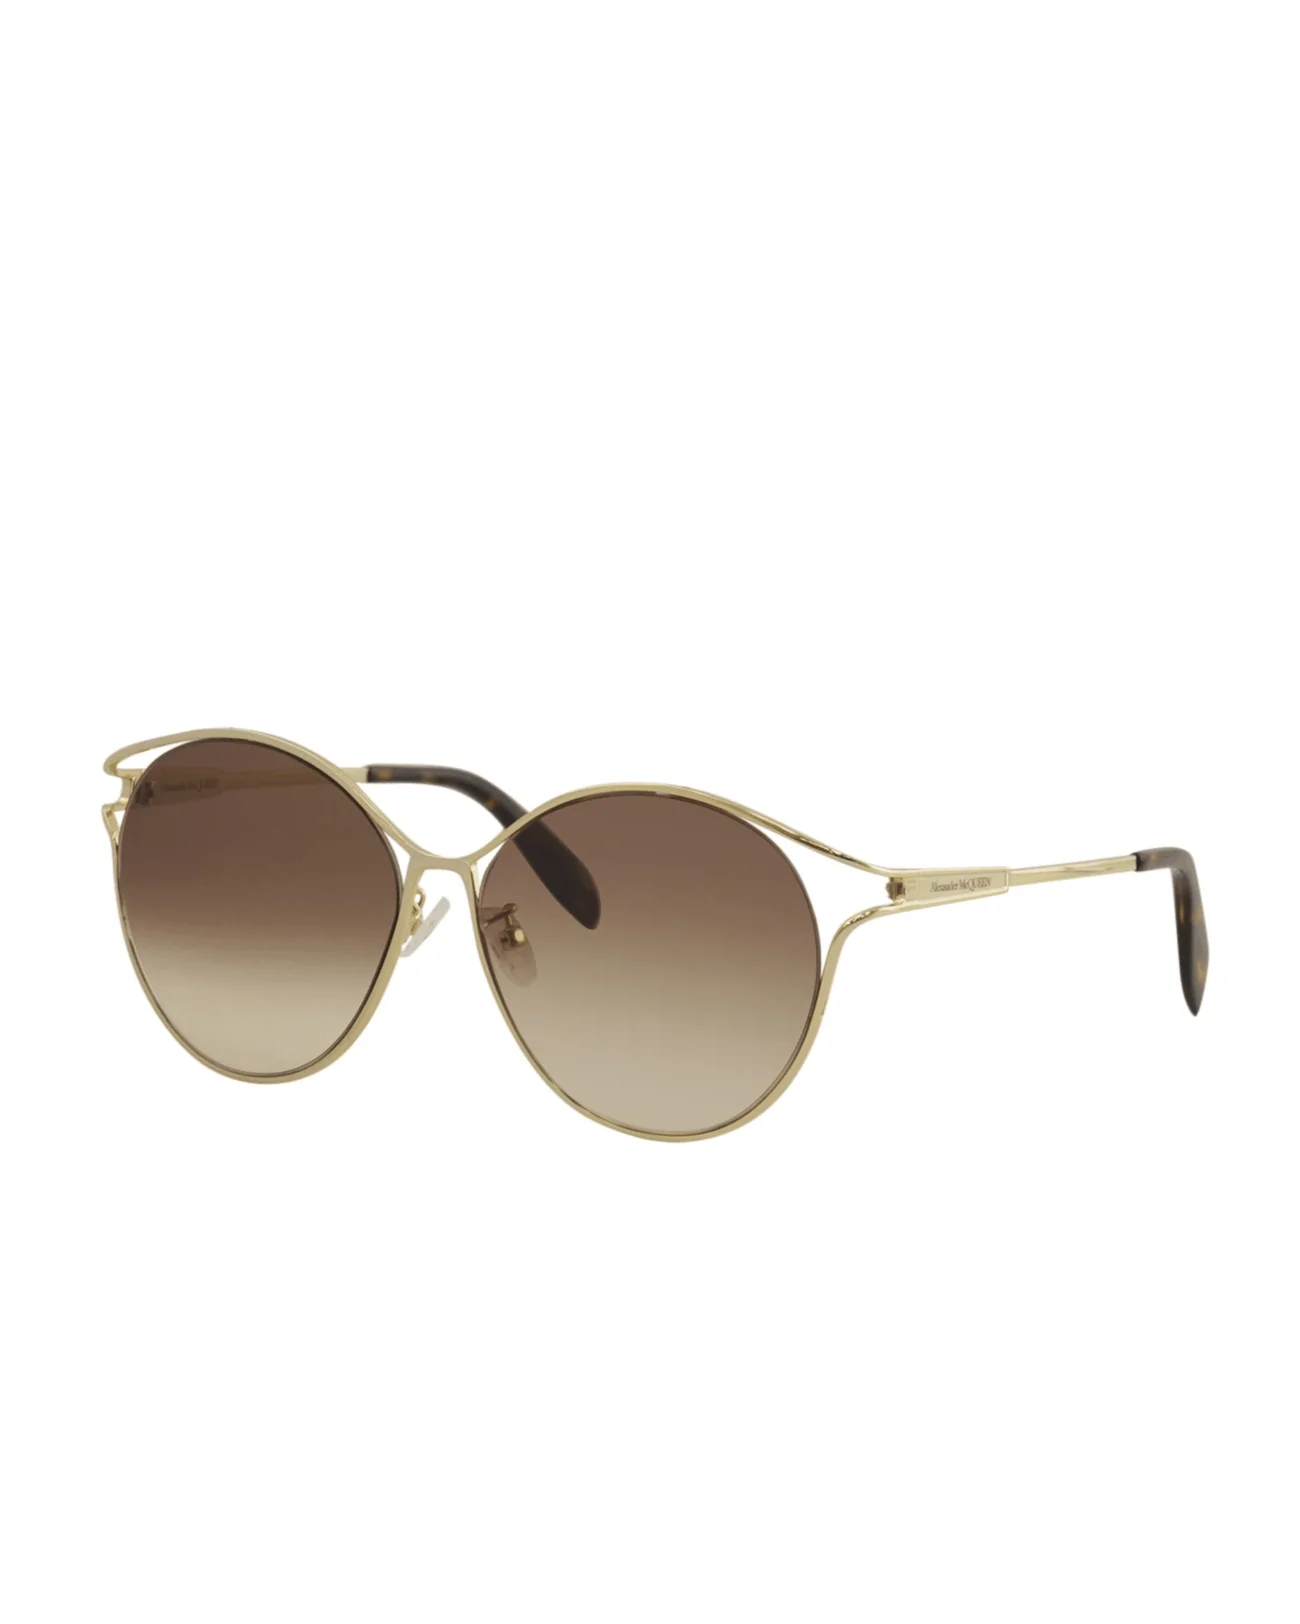 Alexander McQueen AM0210SA 002 Gold Round Sunglasses